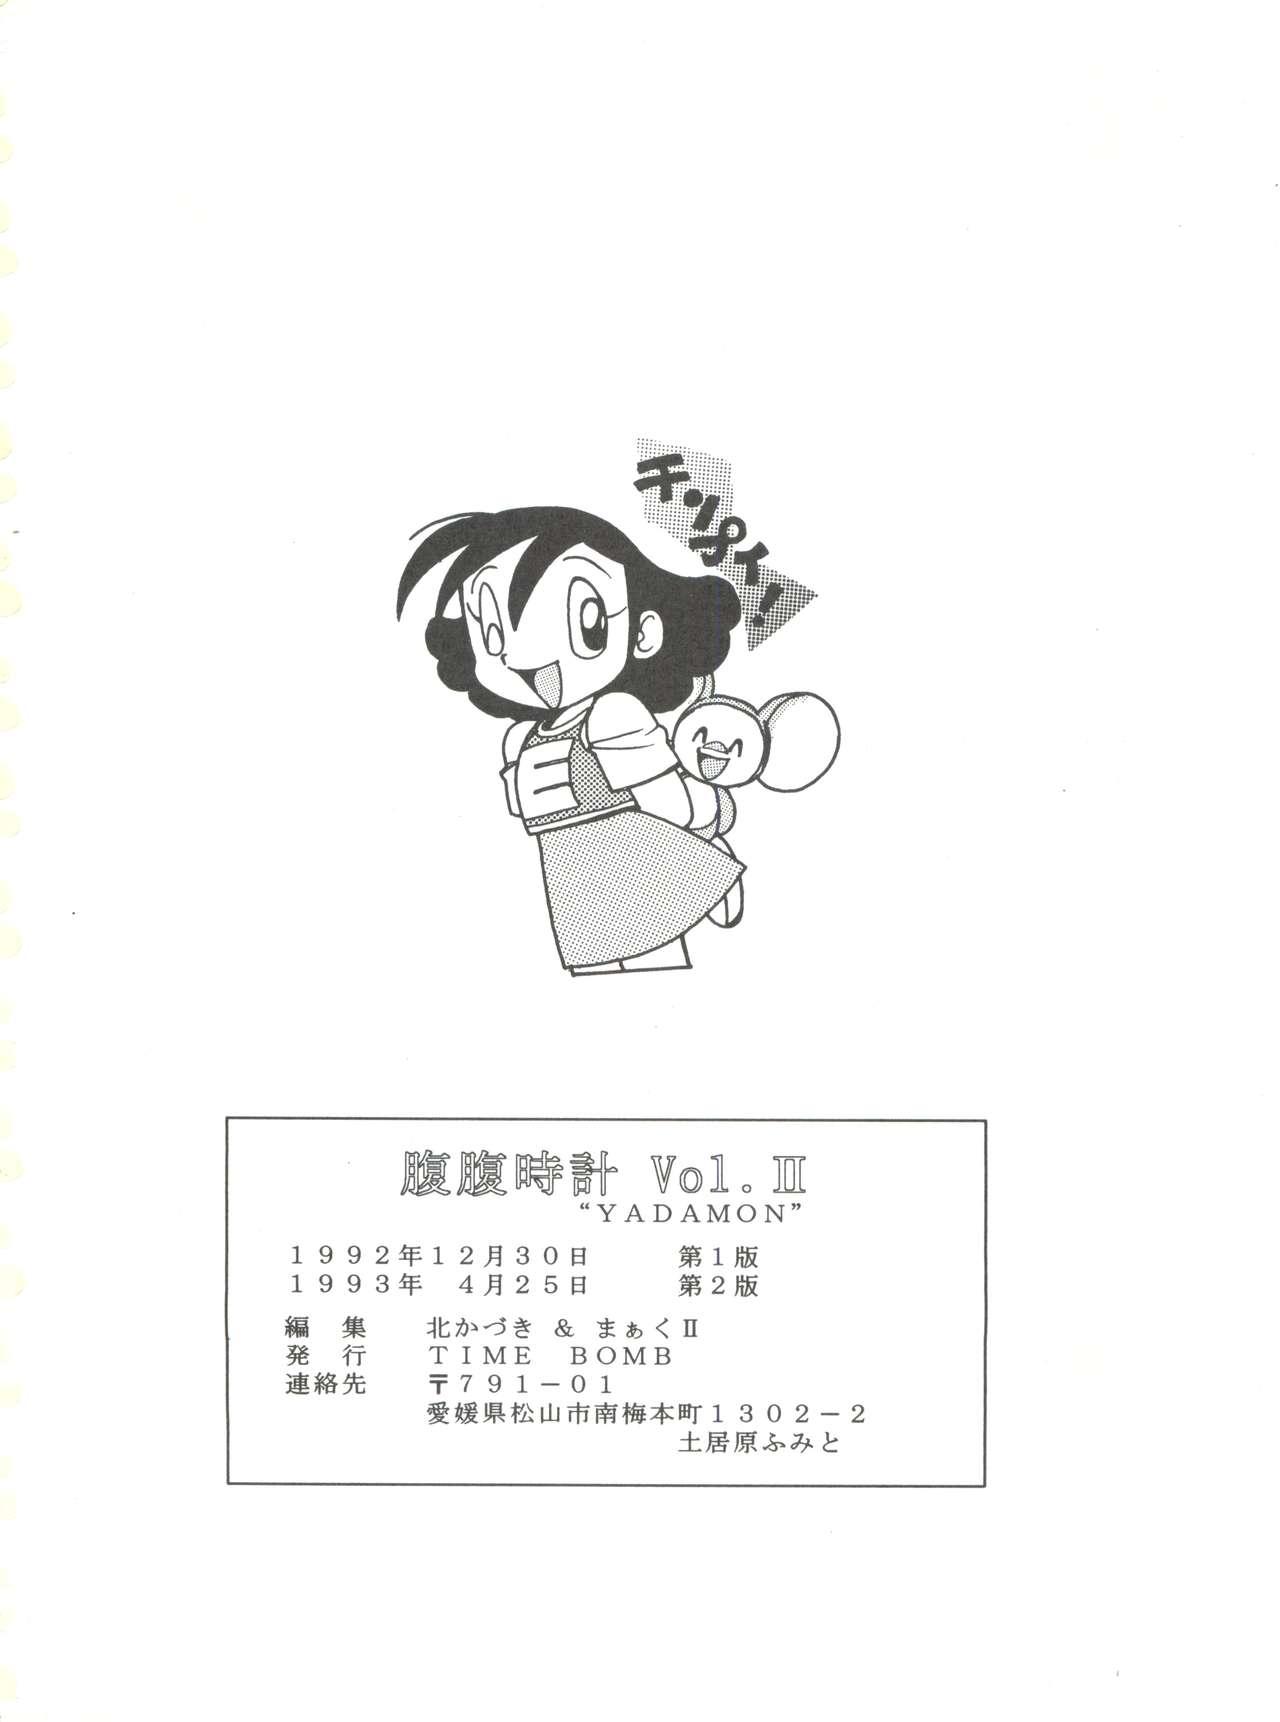 Hara Hara Dokei Vol. II "Yadamon" 46